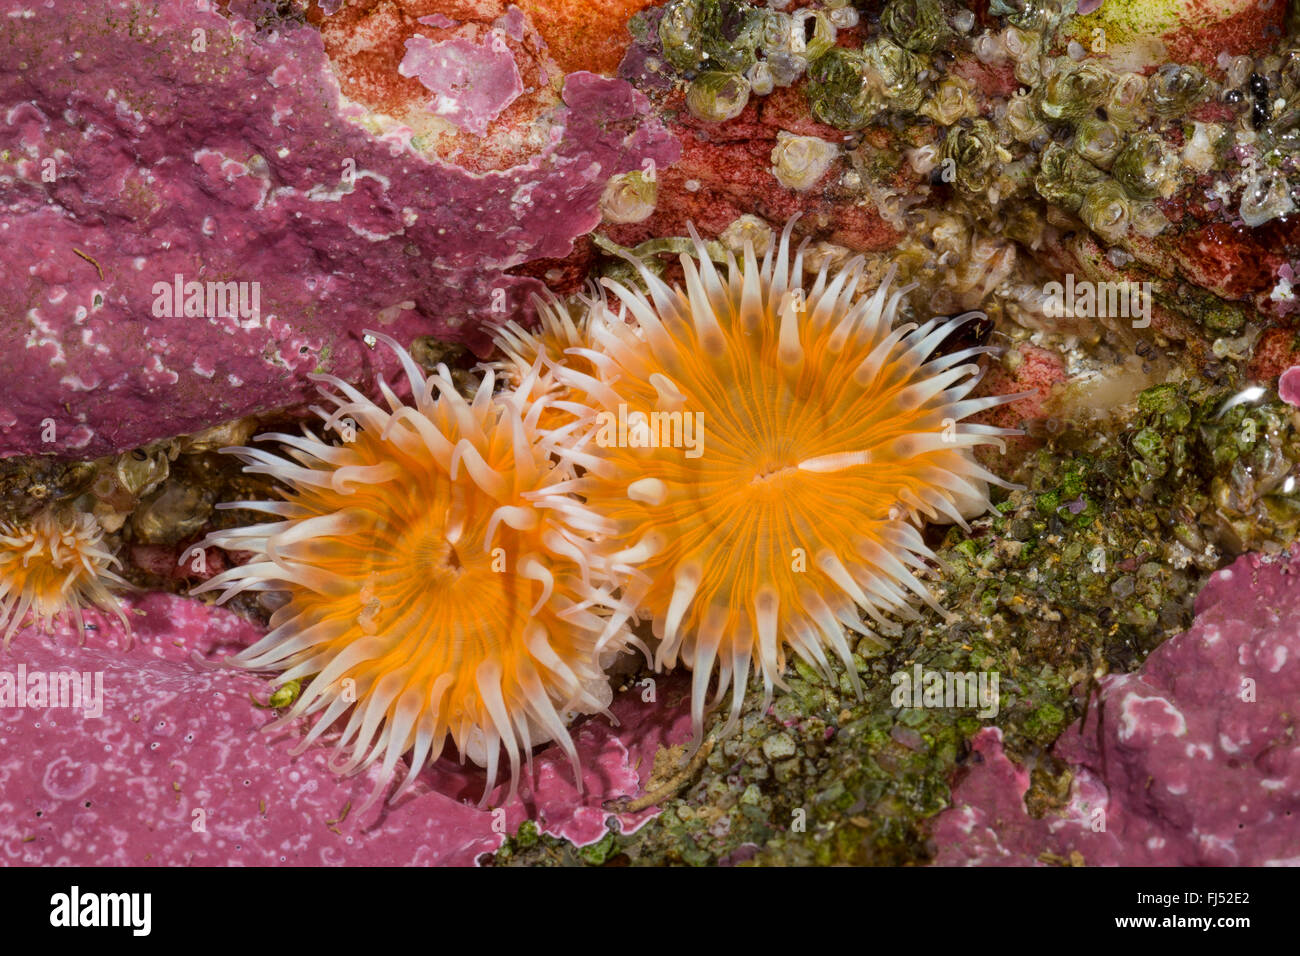 sea anemone (Sagartia elegans, Sagartia elegans var. venusta, Actinia elegans), two sea anemones Stock Photo